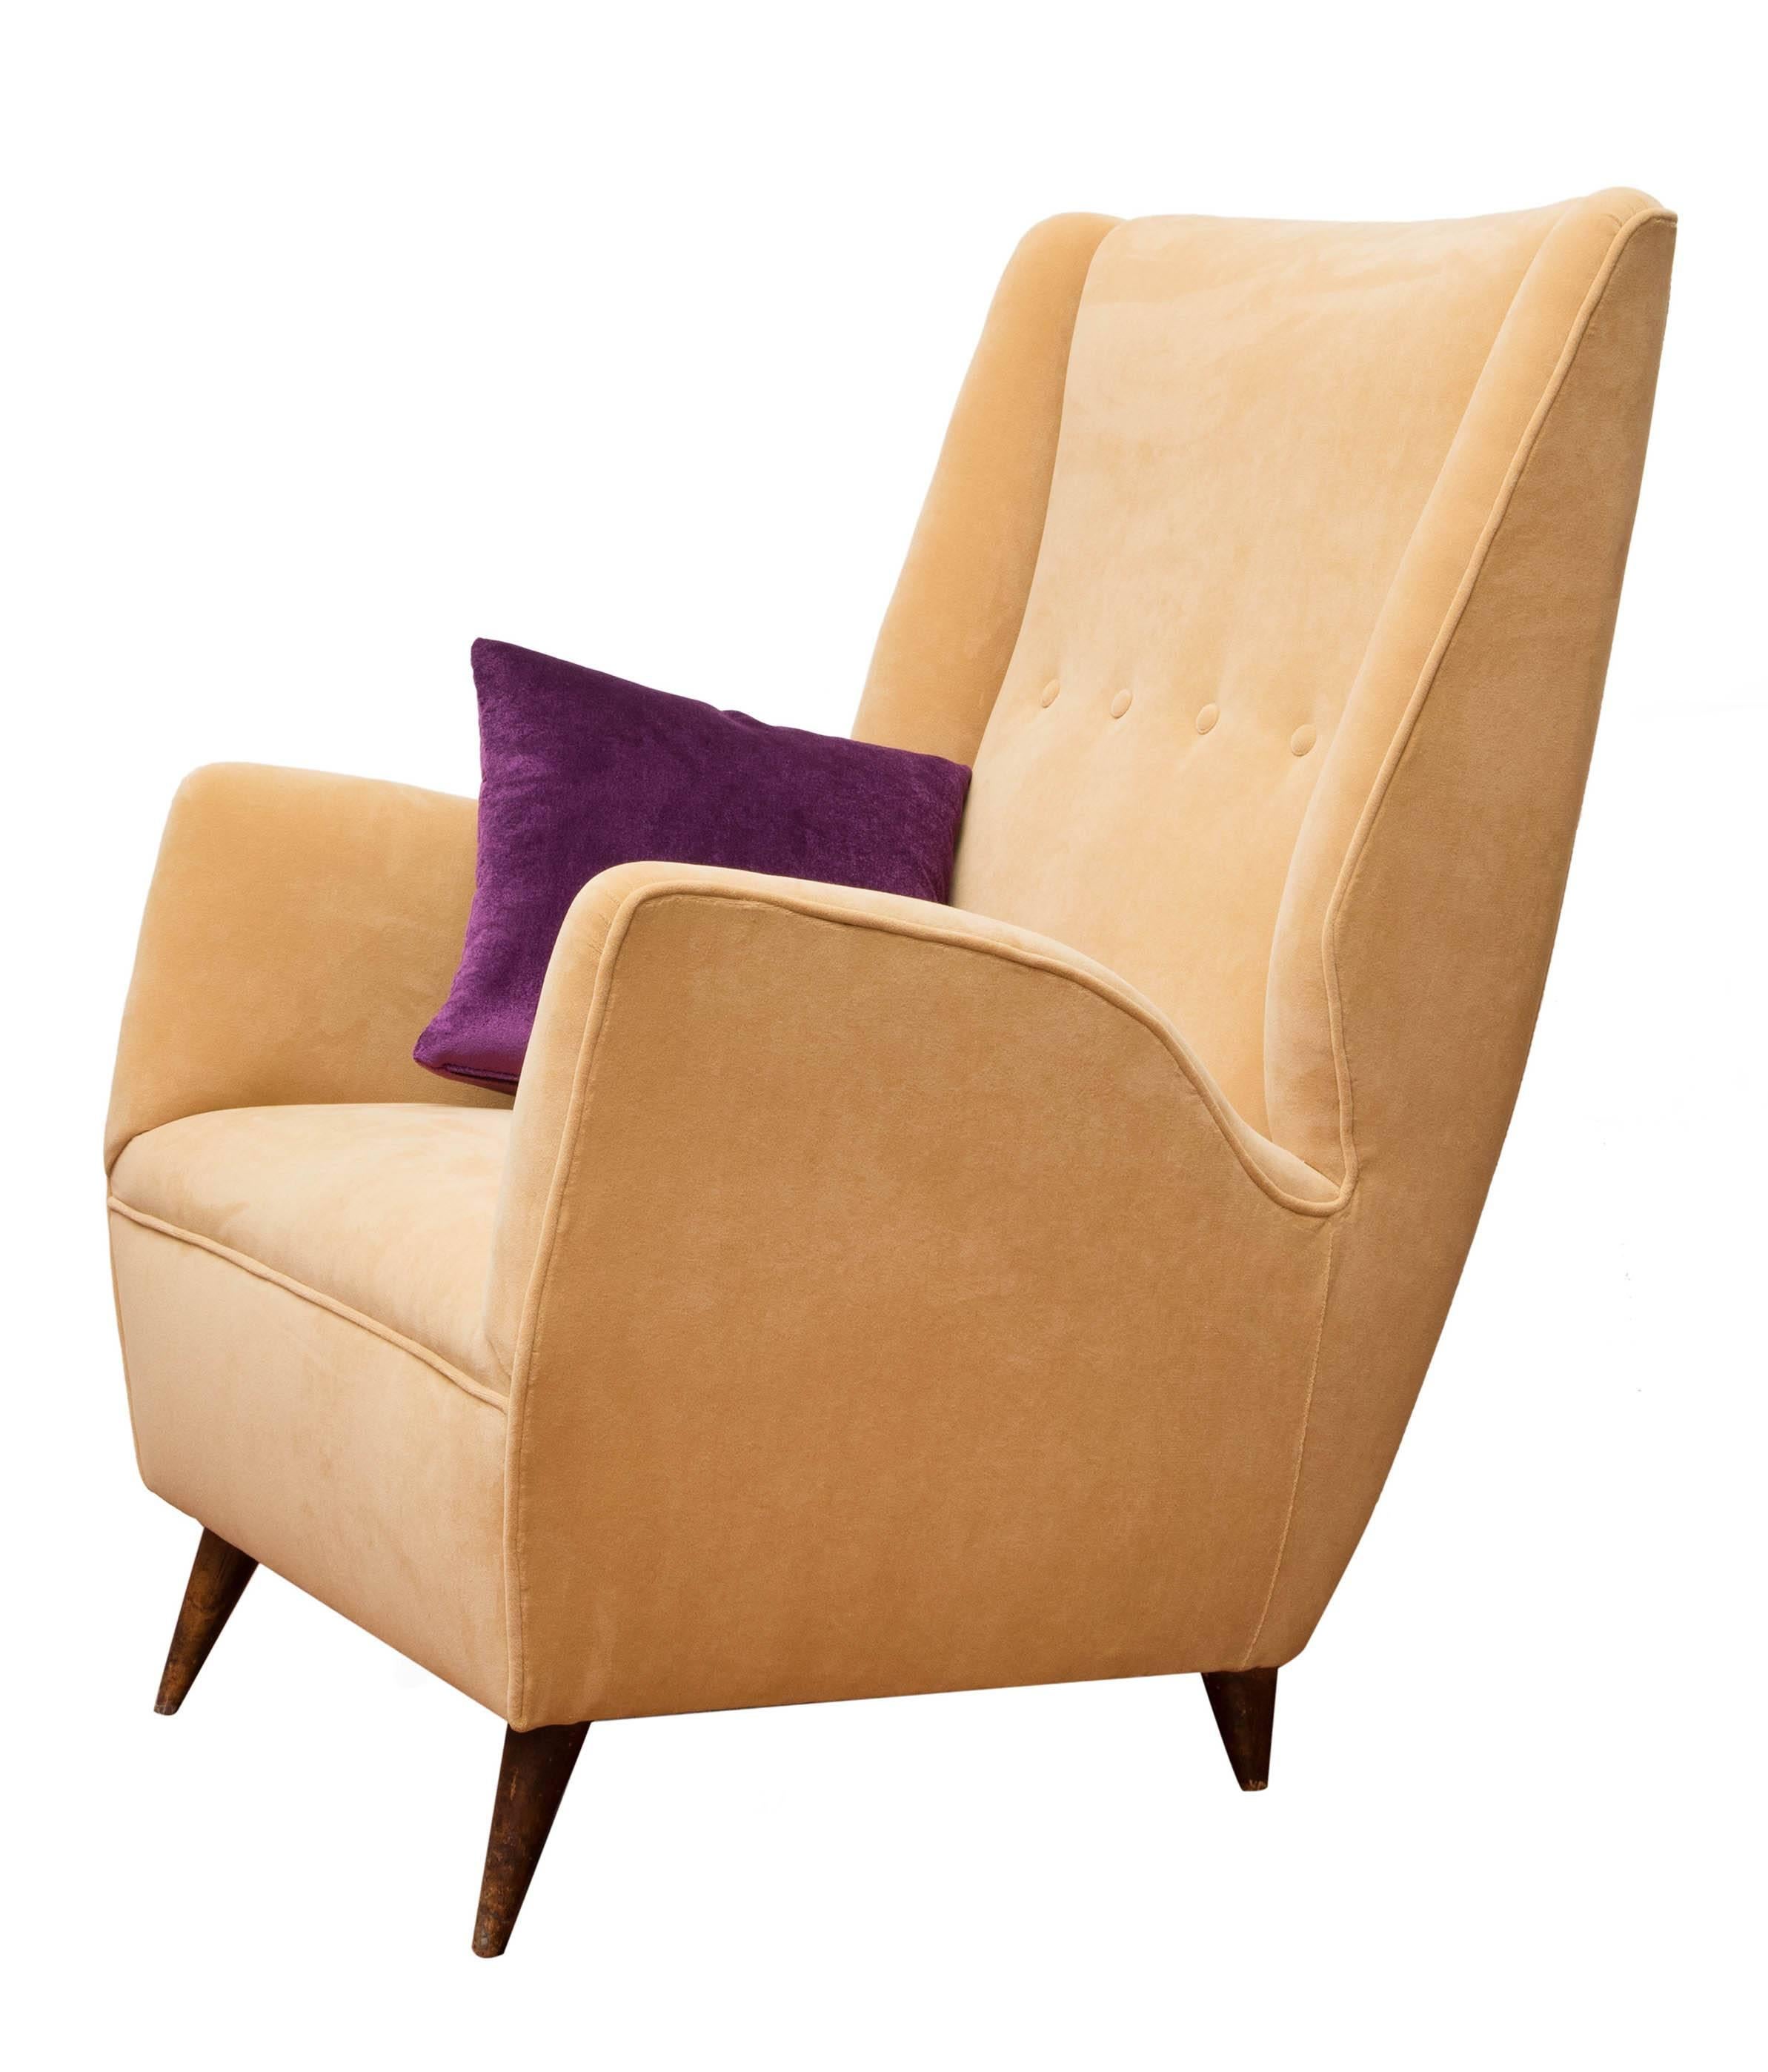 Gio Ponti, velvet armchair, 1950s.
Padded, clad in yellow velvet with wood legs.